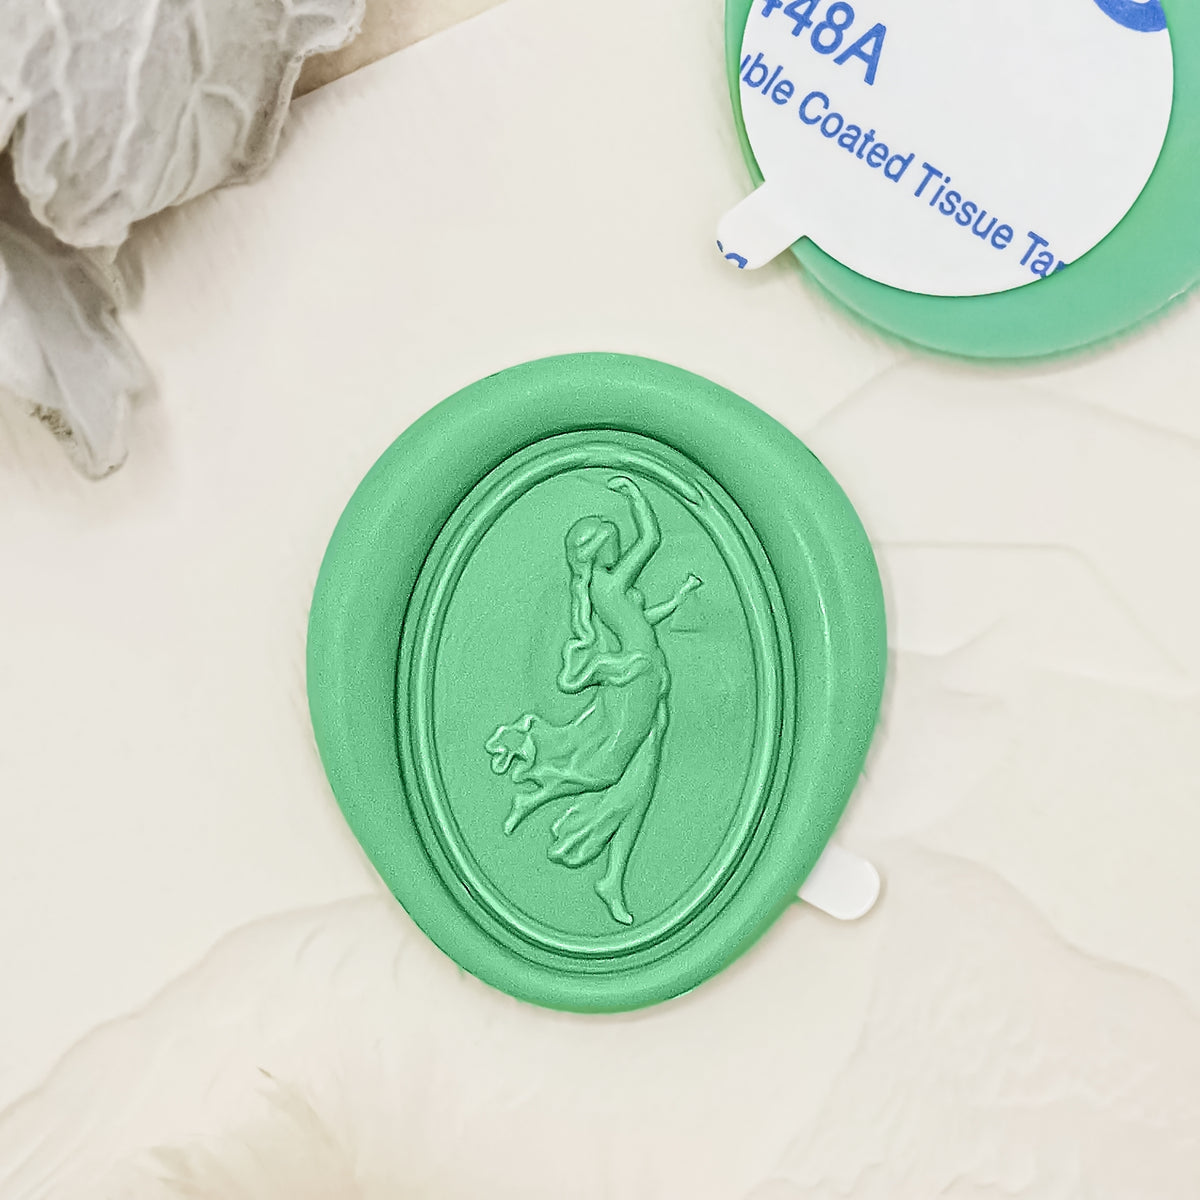 3D Relief Venus Self-adhesive Wax Seal Stickers 1-3